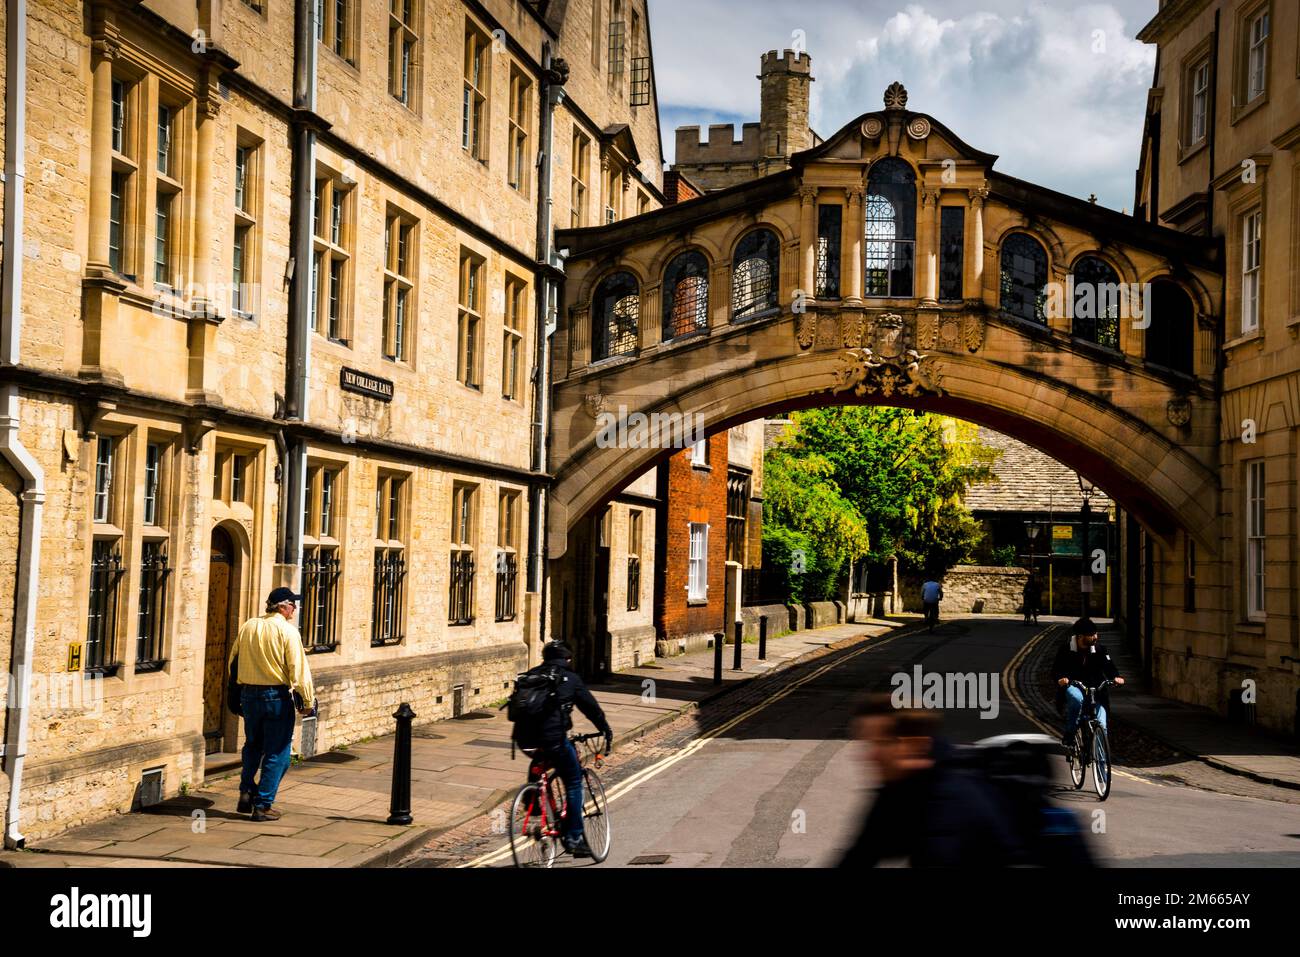 The Hertford Bridge or Bridge of Sighs in Oxford, England. Stock Photo